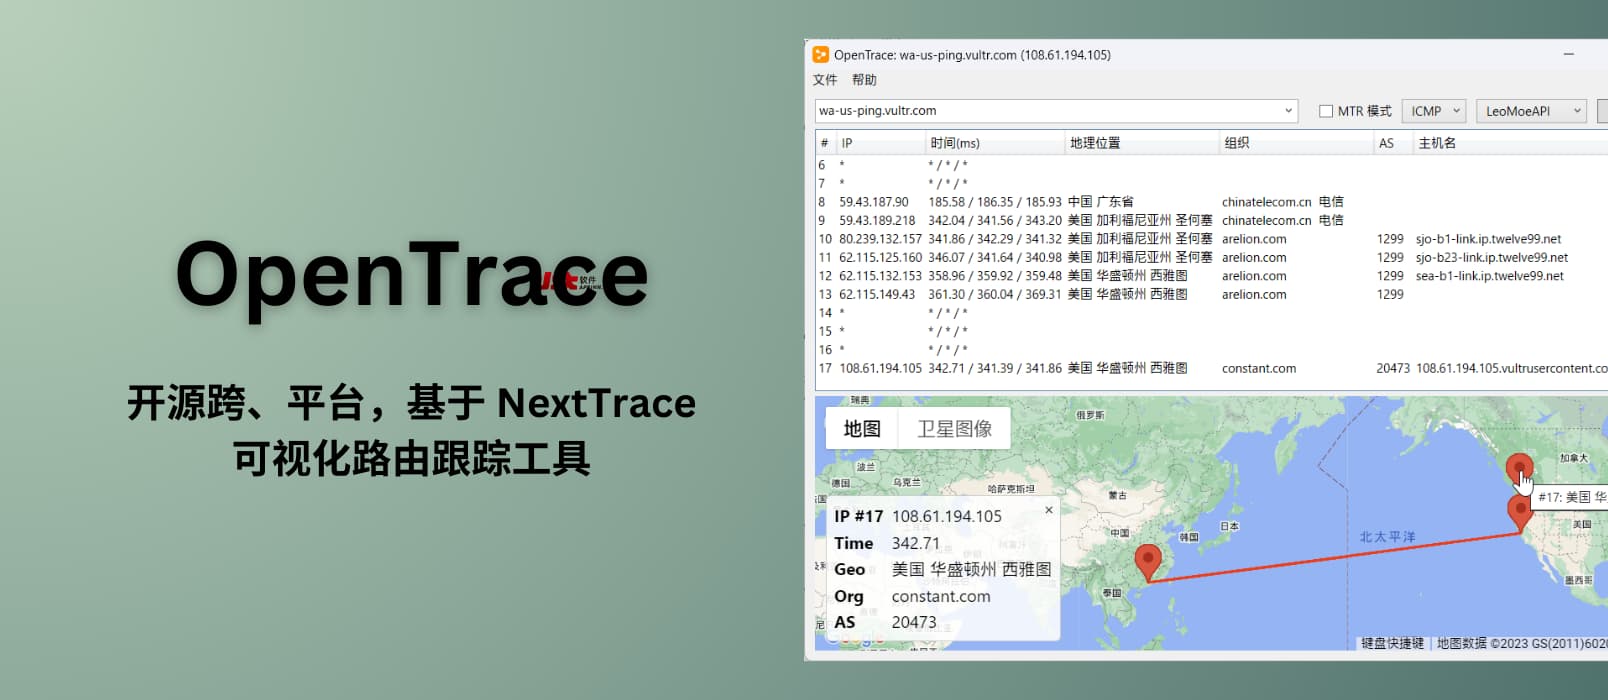 OpenTrace  开源跨、平台，基于 NextTrace，可视化路由跟踪工具，在地图上追踪并显示 IP 地址  小众软件